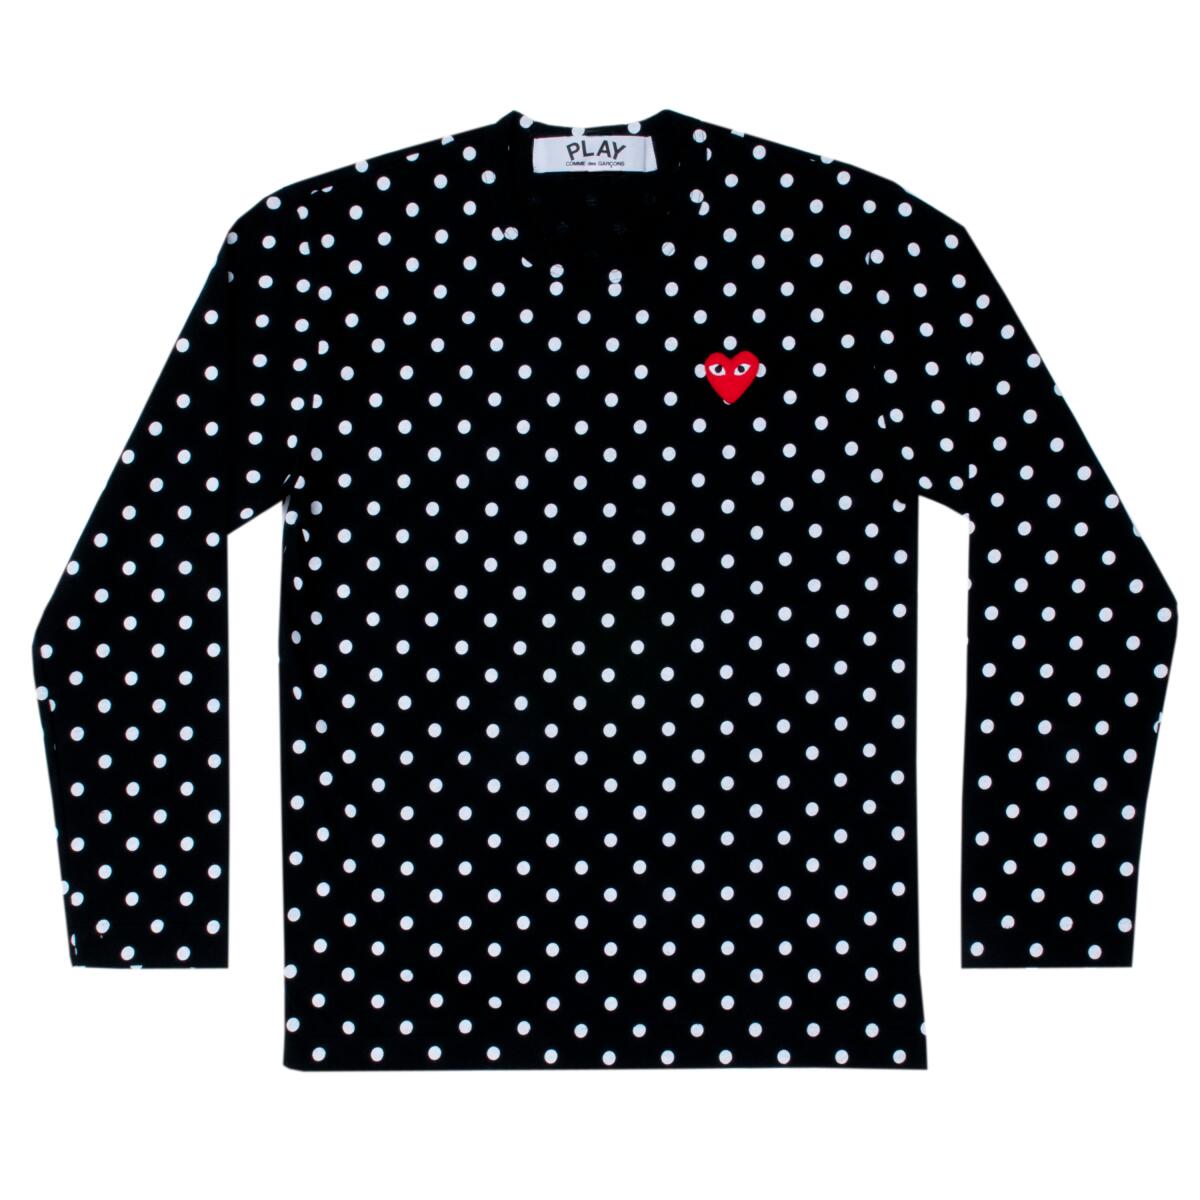 Comme des Garçons Play’s polka-dot T-shirt.